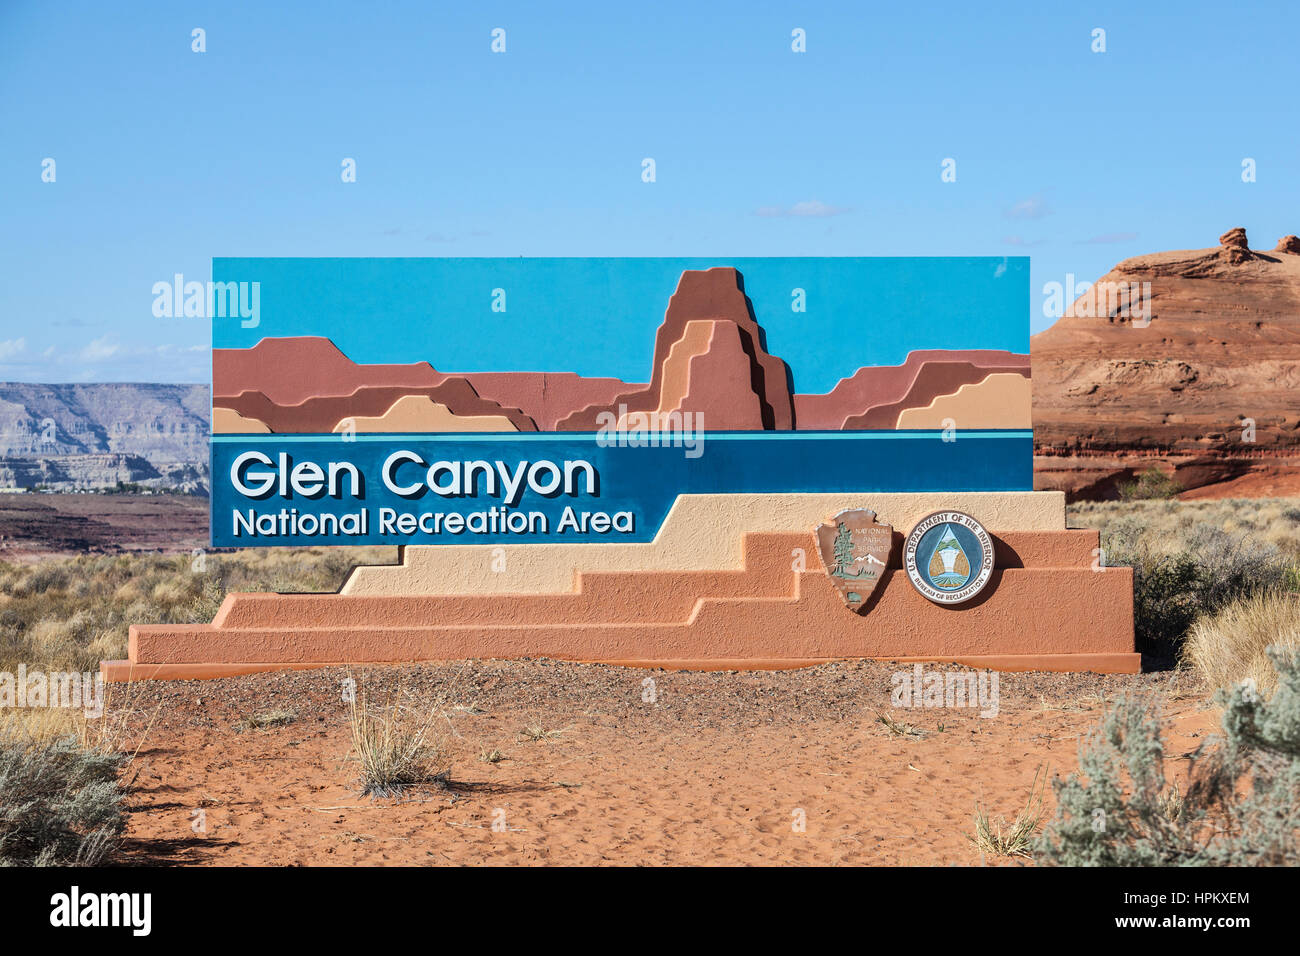 Page, Arizona, USA - 17. Oktober 2016: Glen Canyon National Recreation Area Ortseingangsschild in der Northern Arizona Wüste. Stockfoto